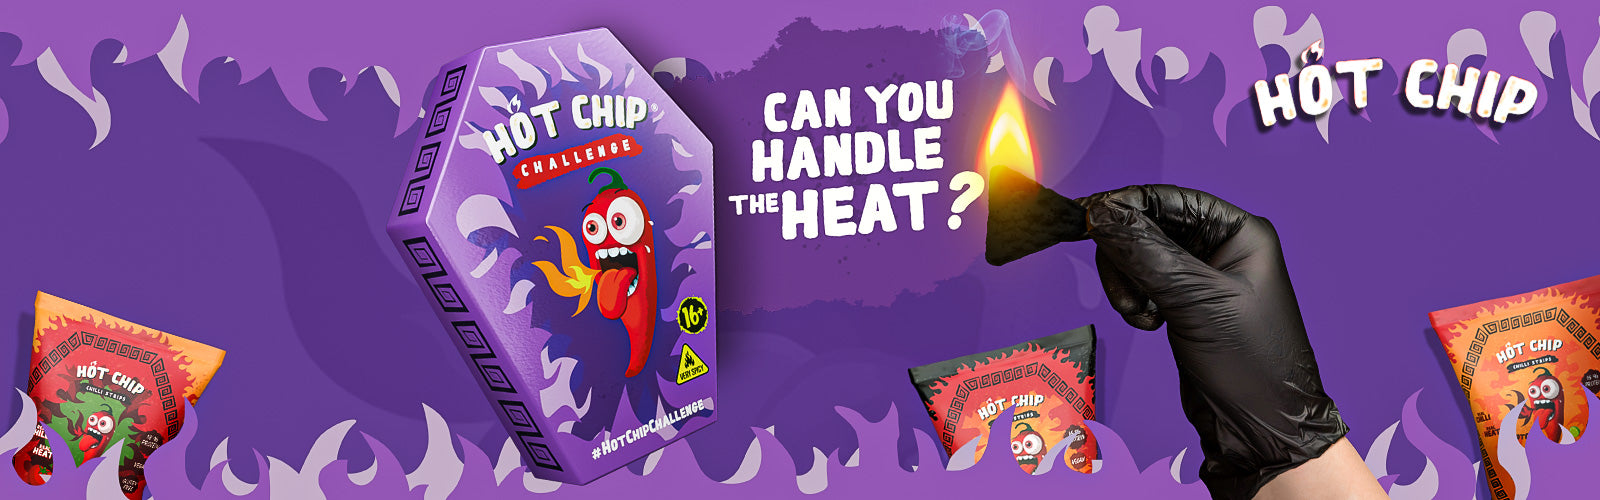 hot chip banner purple edition